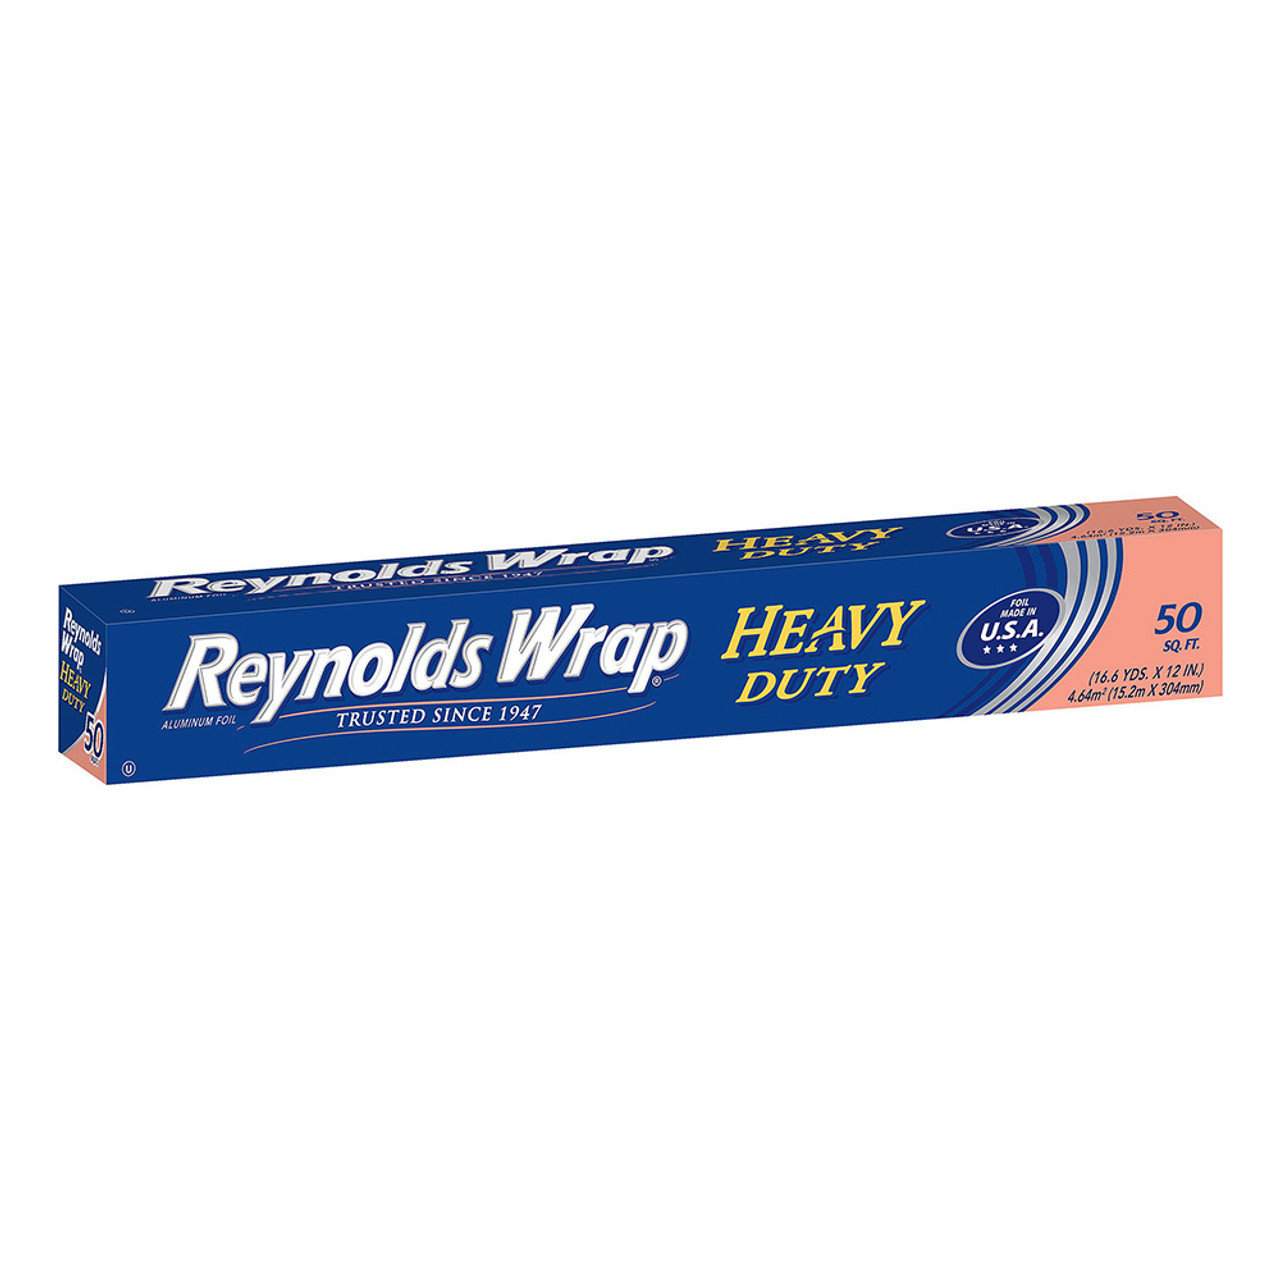 Reynolds Wrap Heavy Duty Aluminum Foil - 150 Sq ft